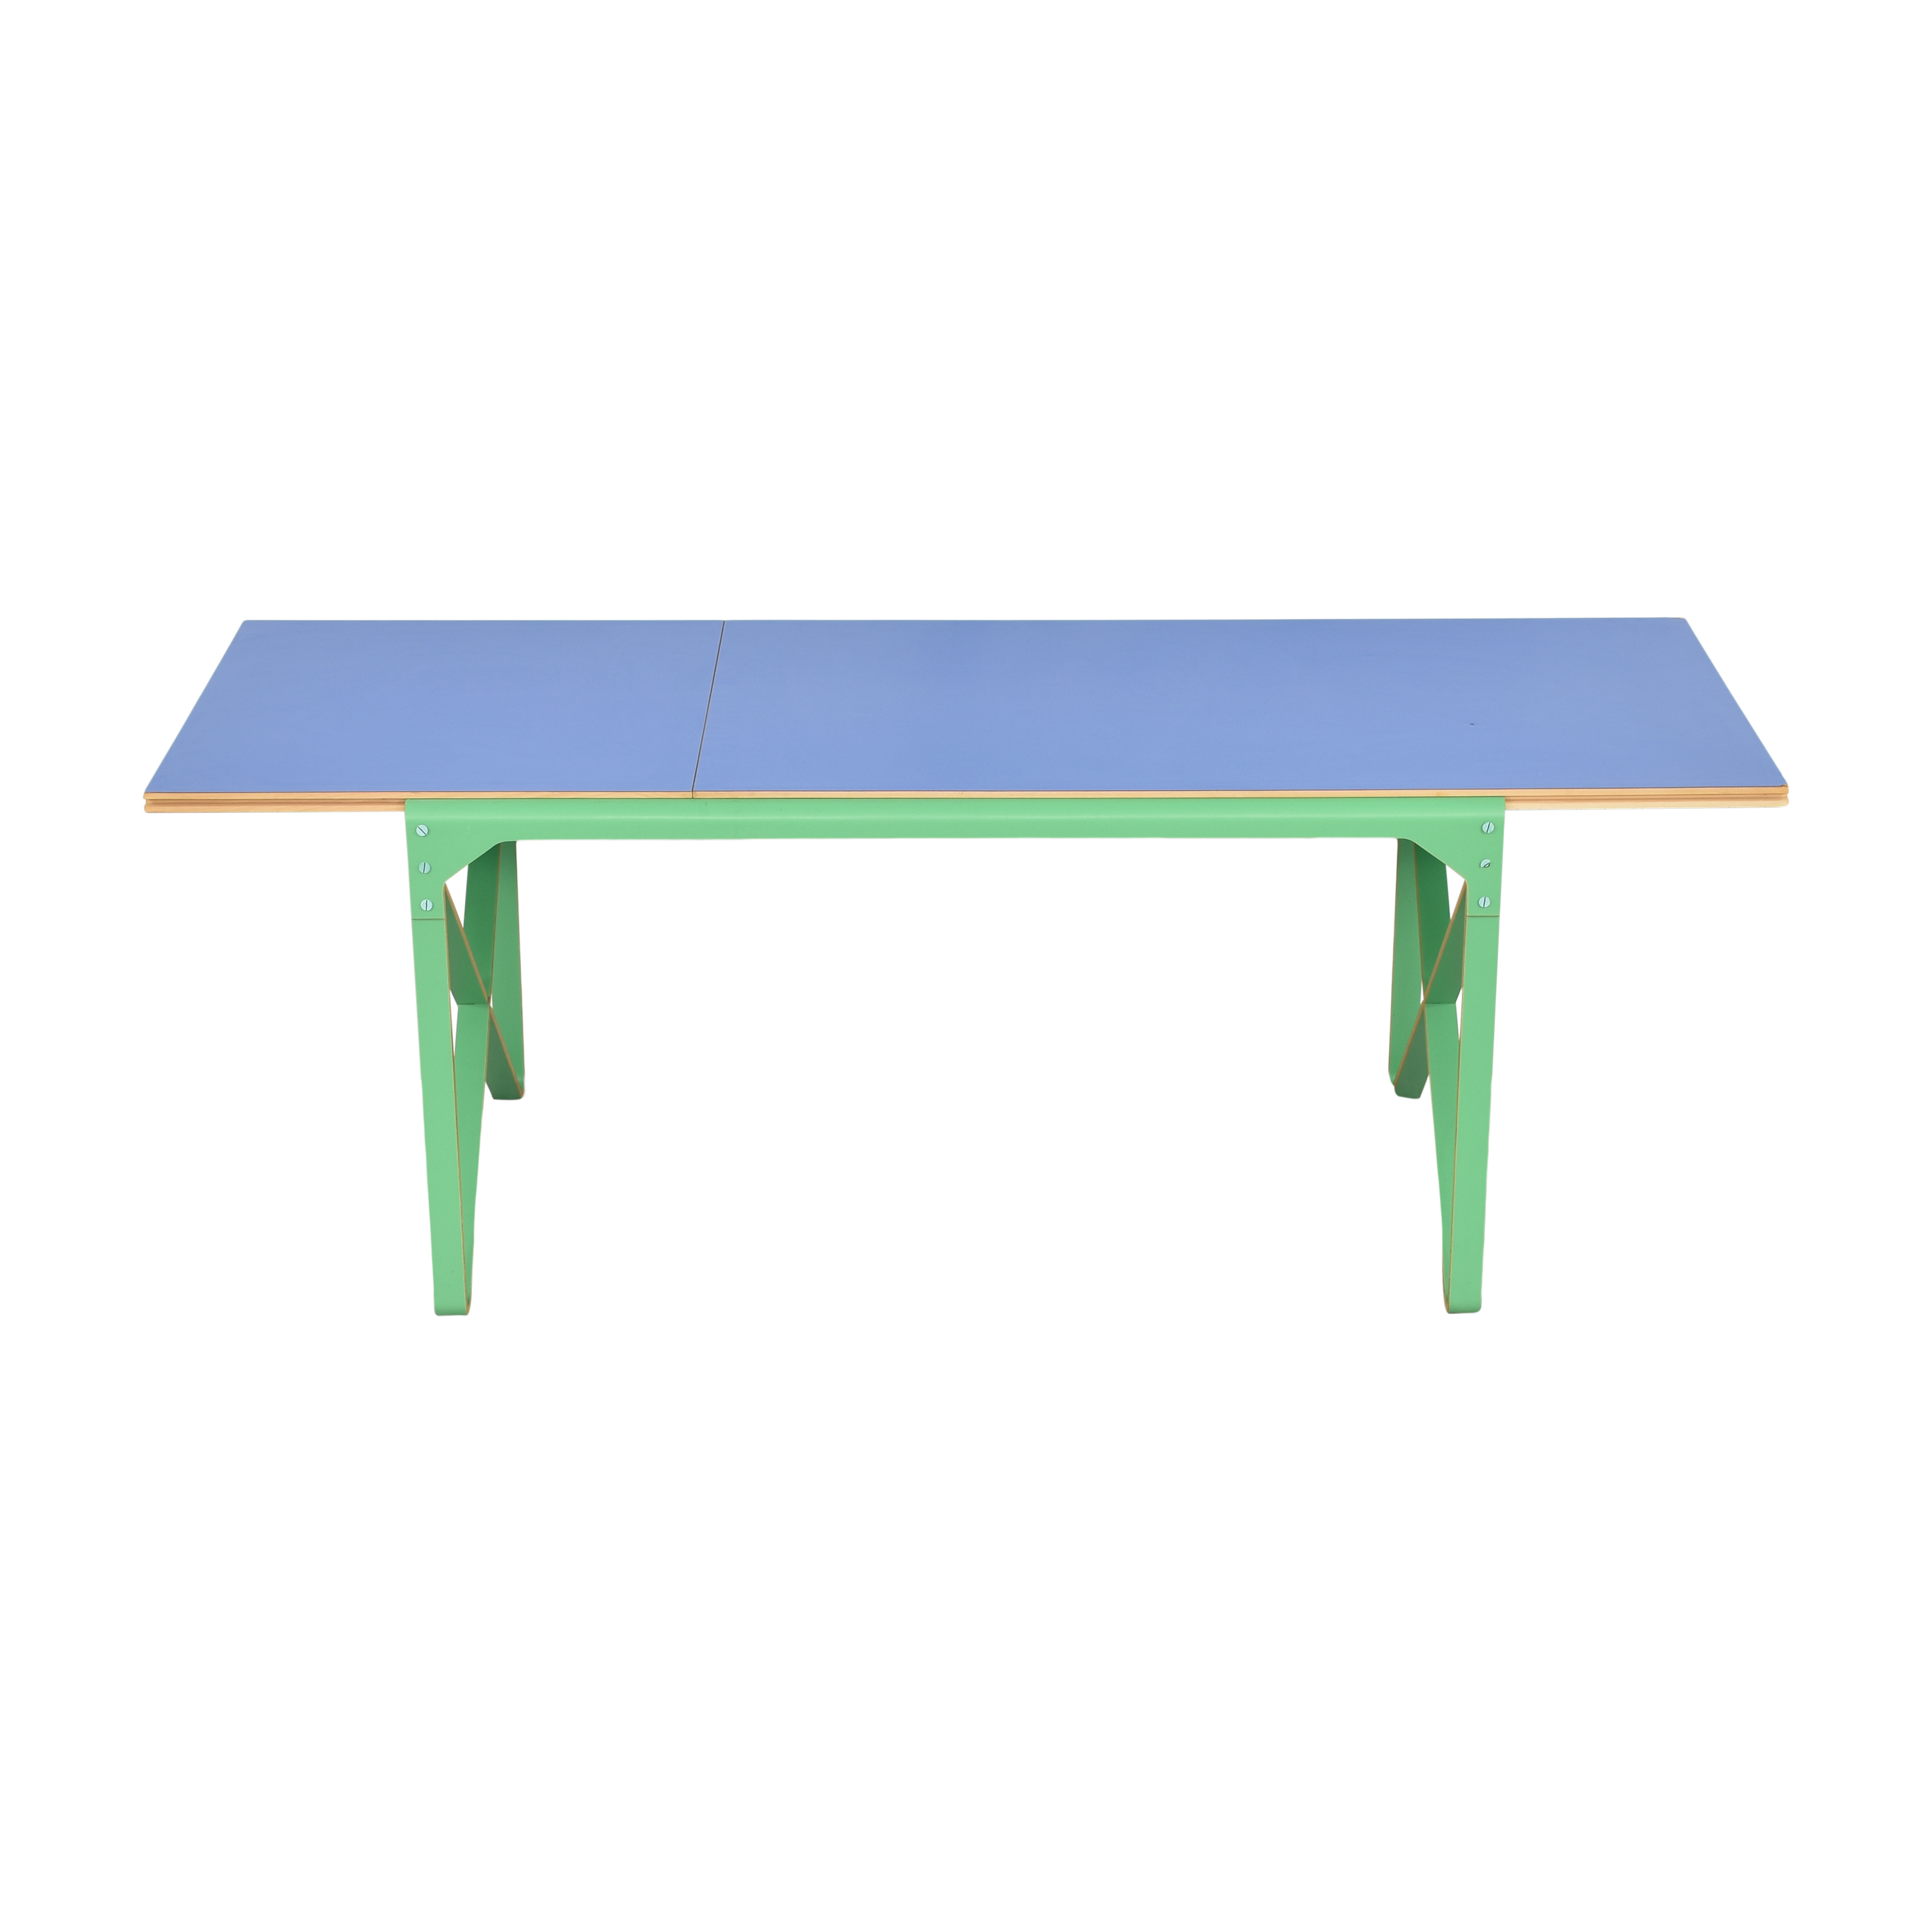 1656623956-table2.jpeg